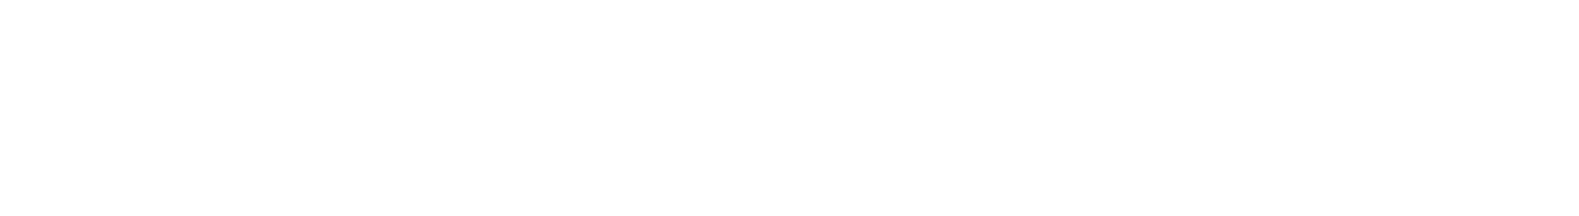 Assa Abloy
 logo large for dark backgrounds (transparent PNG)